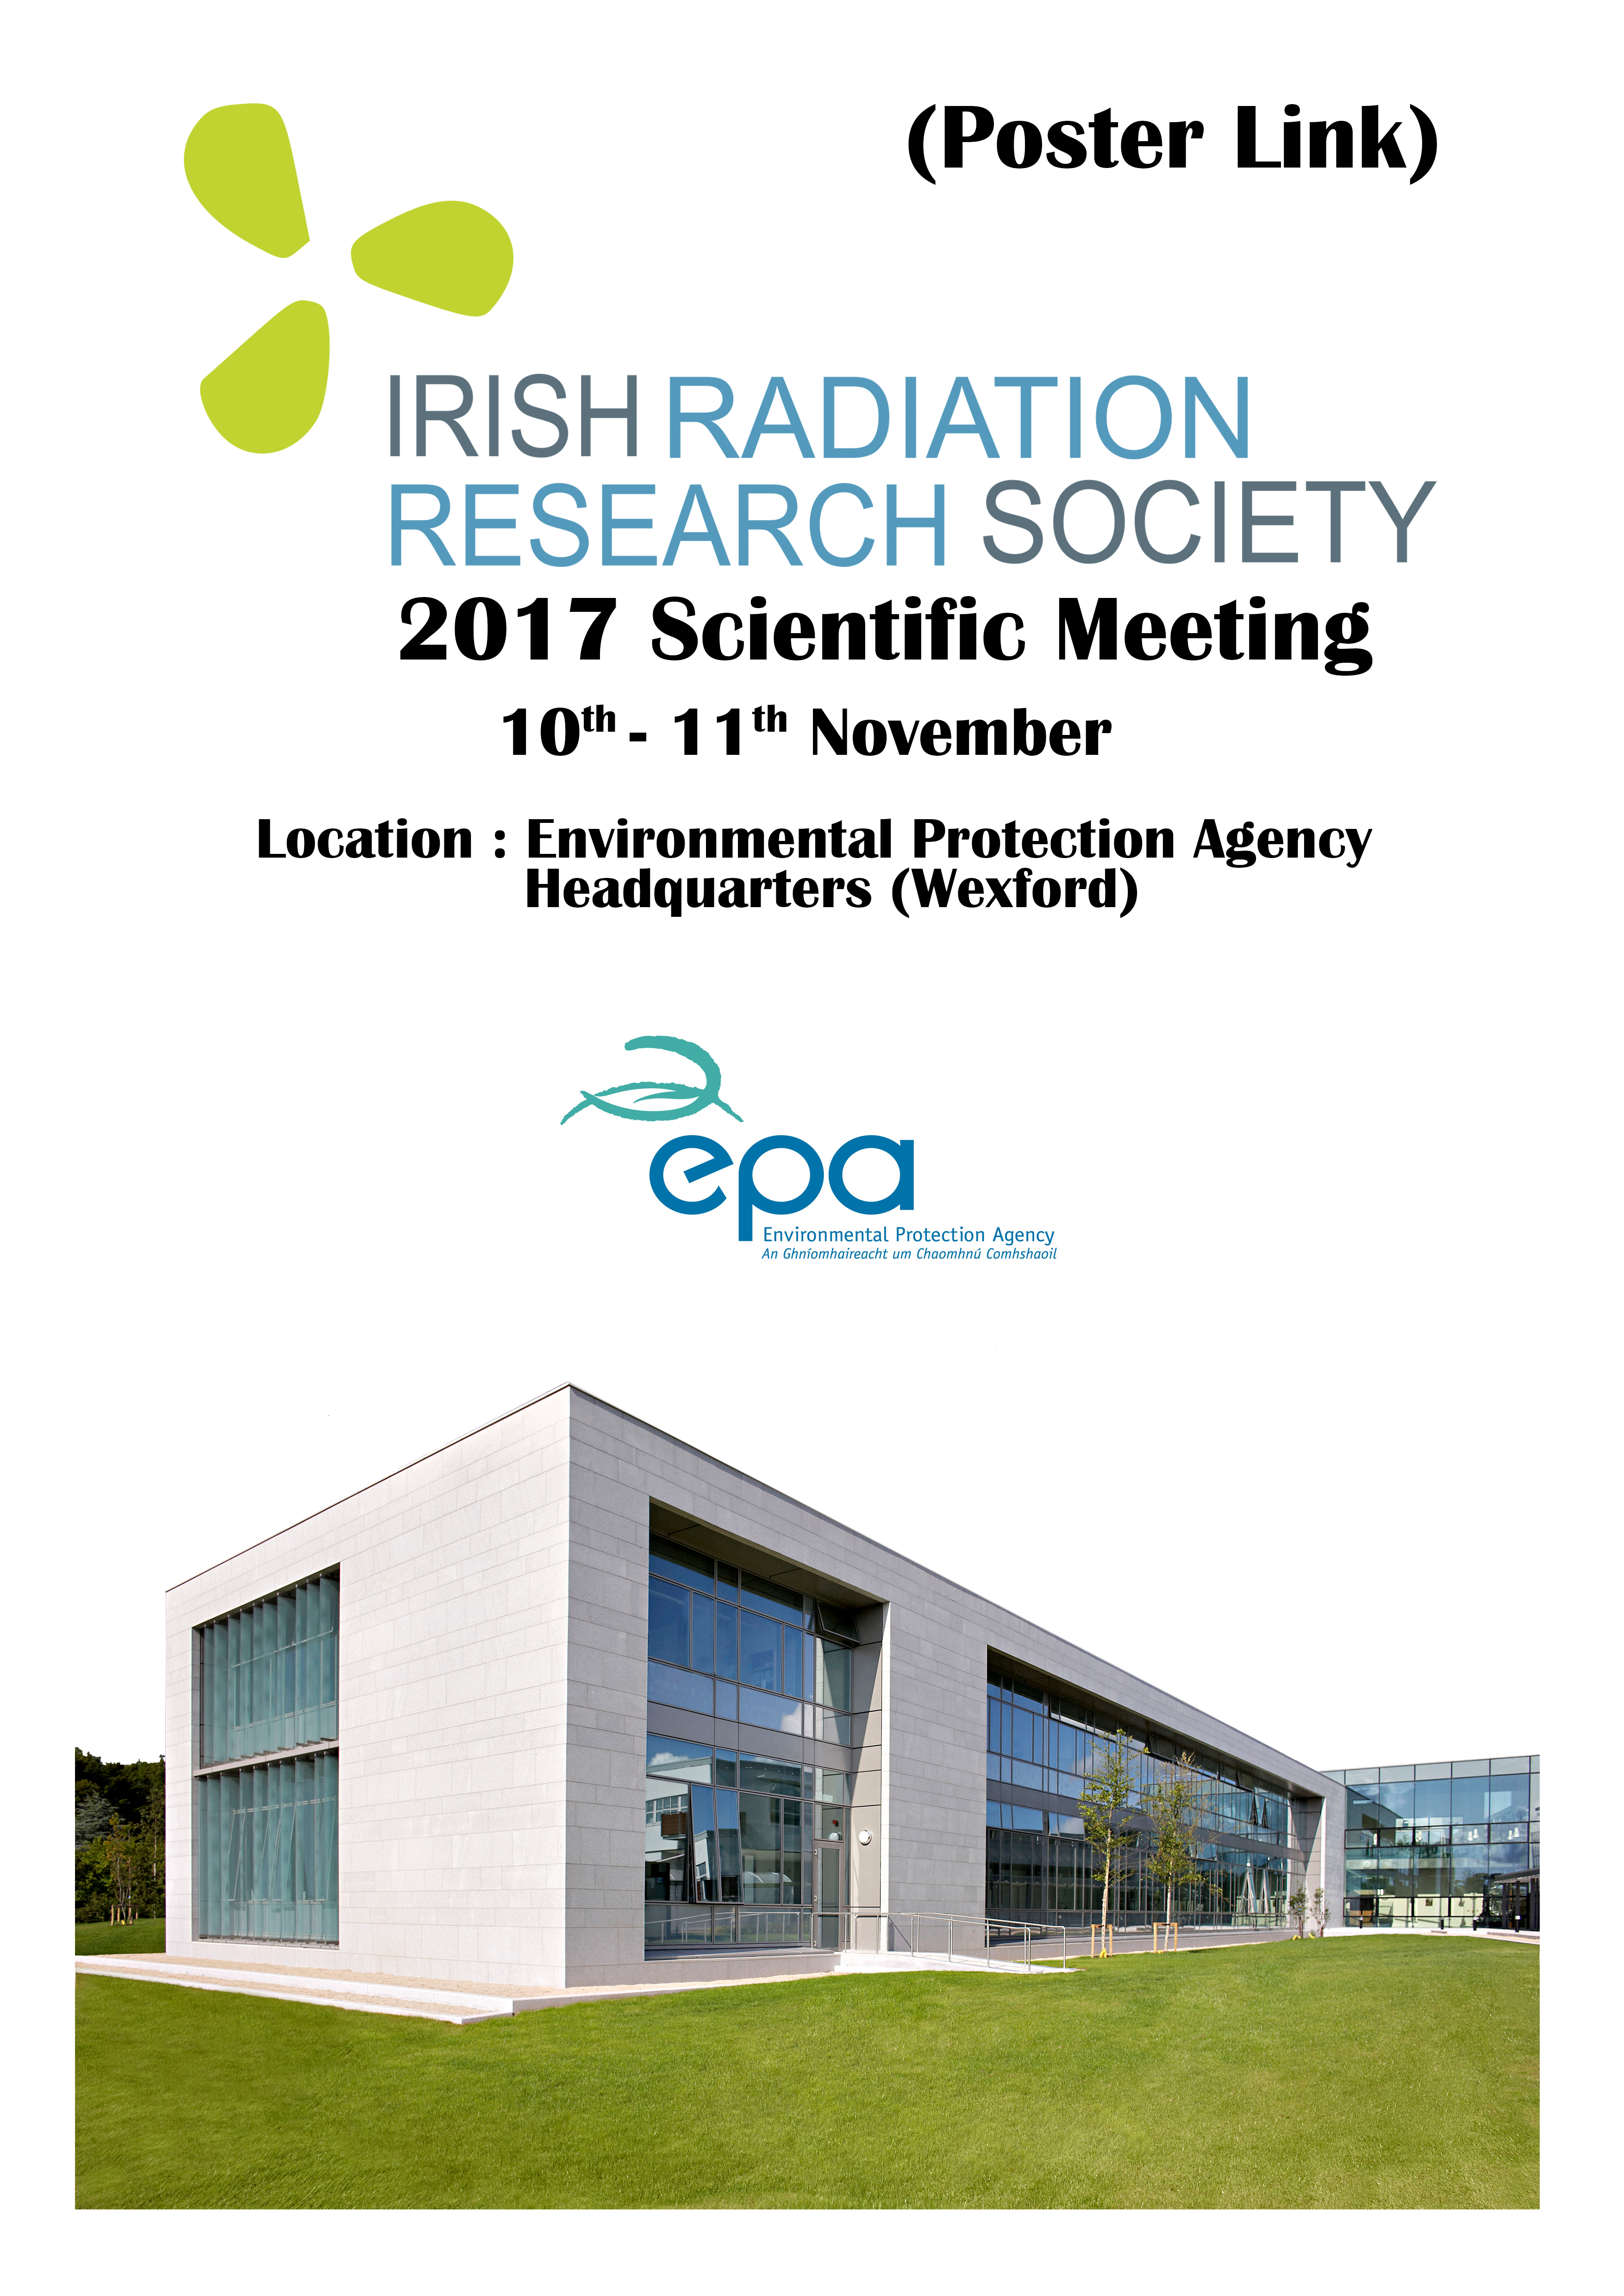 Irish Radiation Research Society Home Page